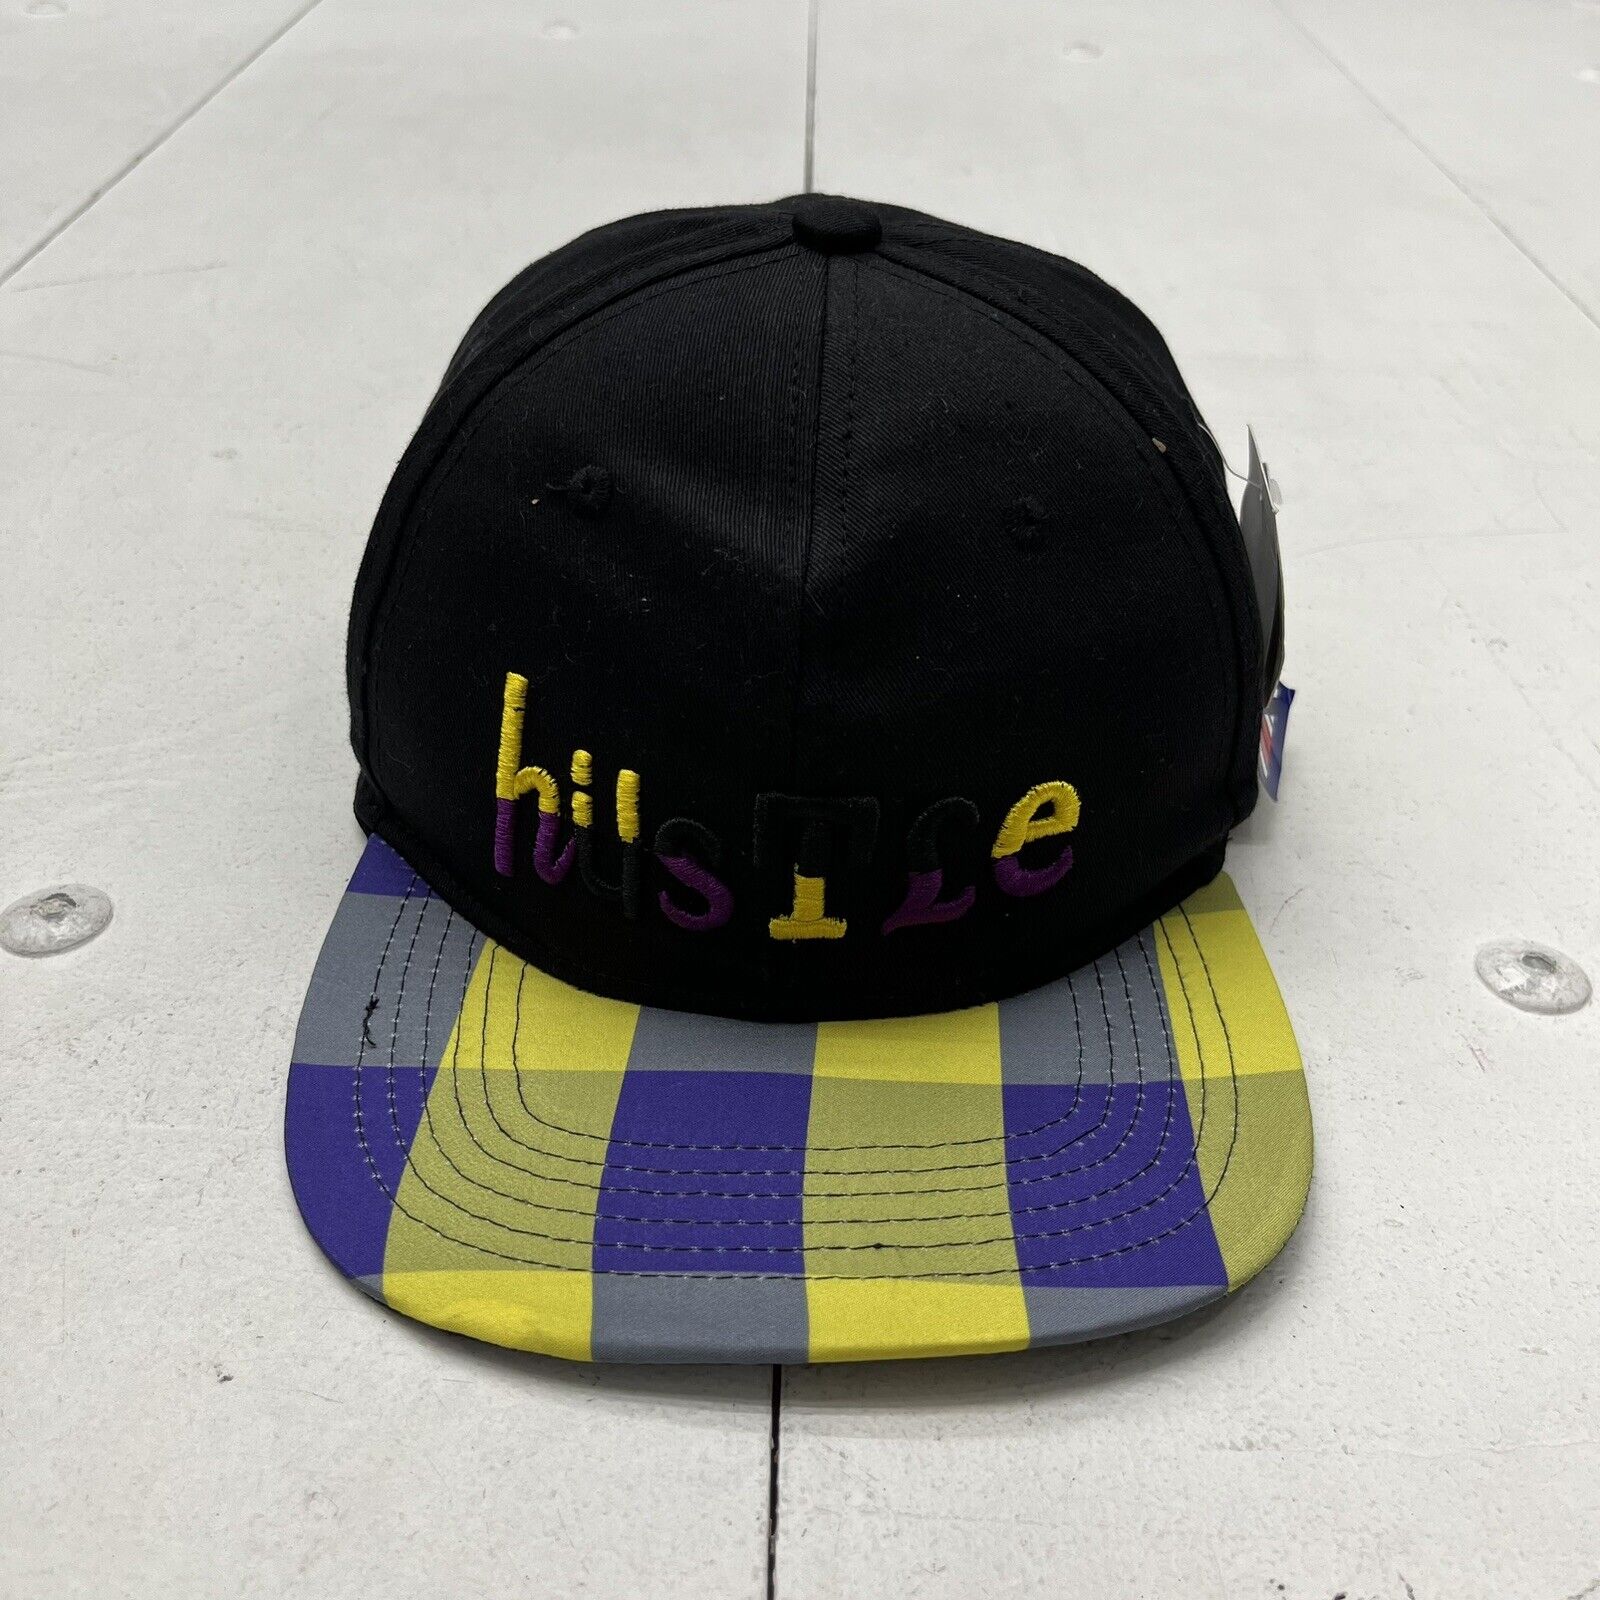 GS-115 Black Hustle Hat Men’s One Size Fits Most NEW